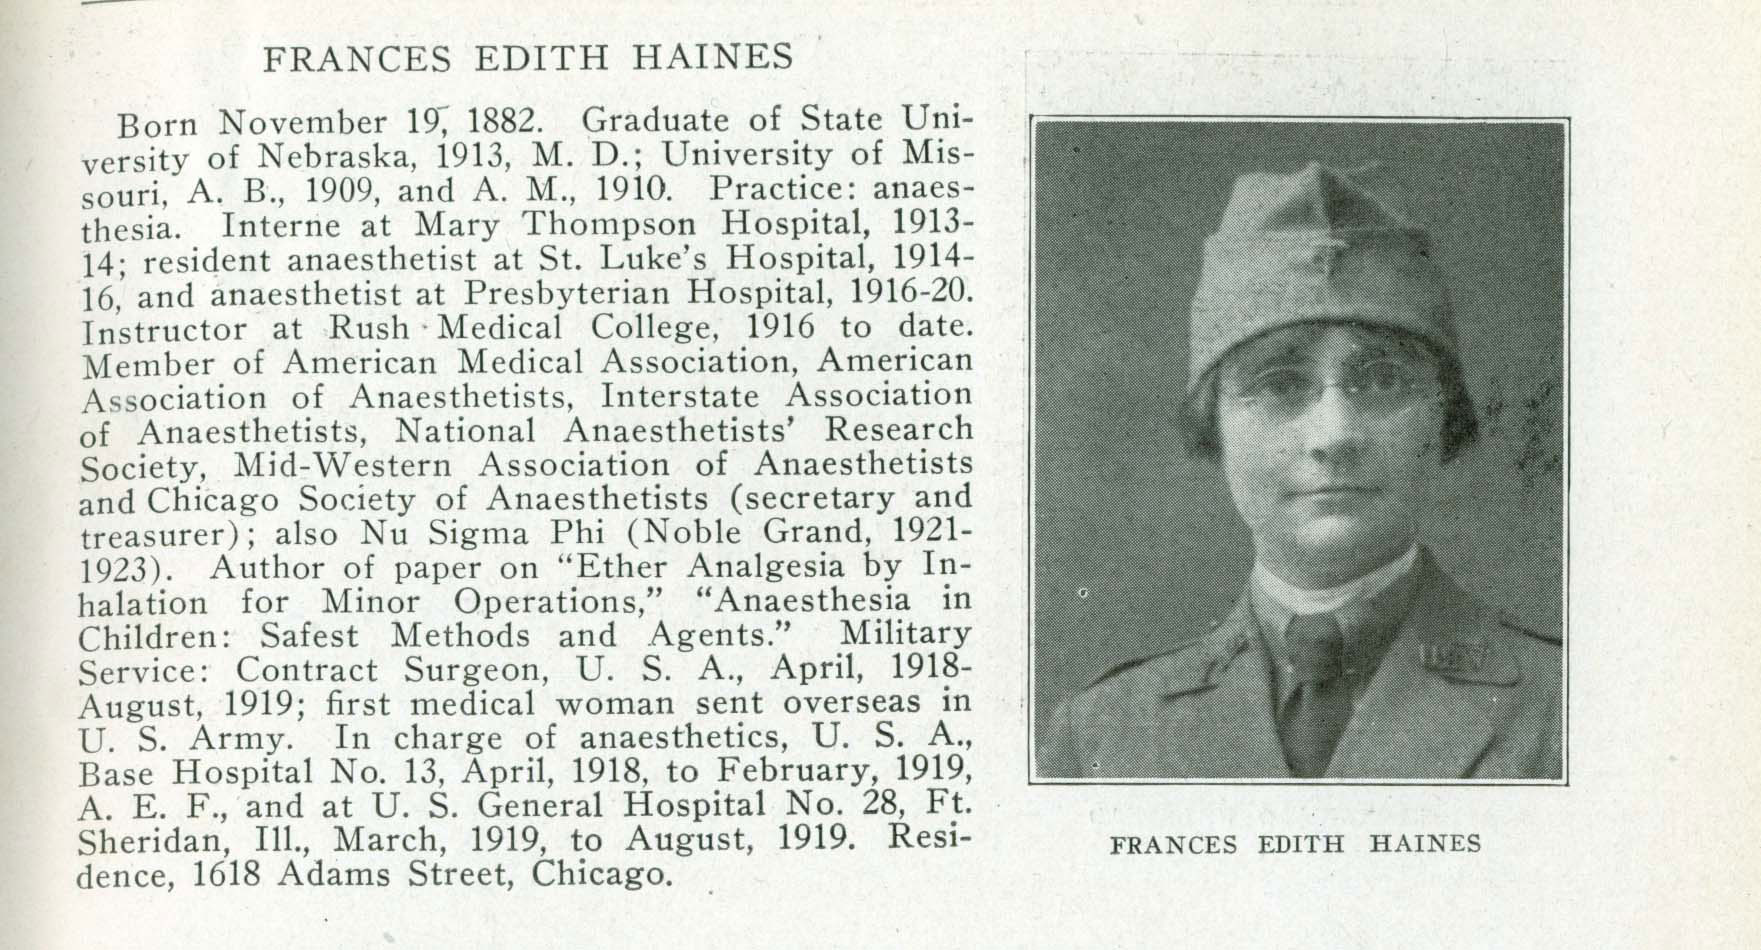 Frances Edith Haines, MD